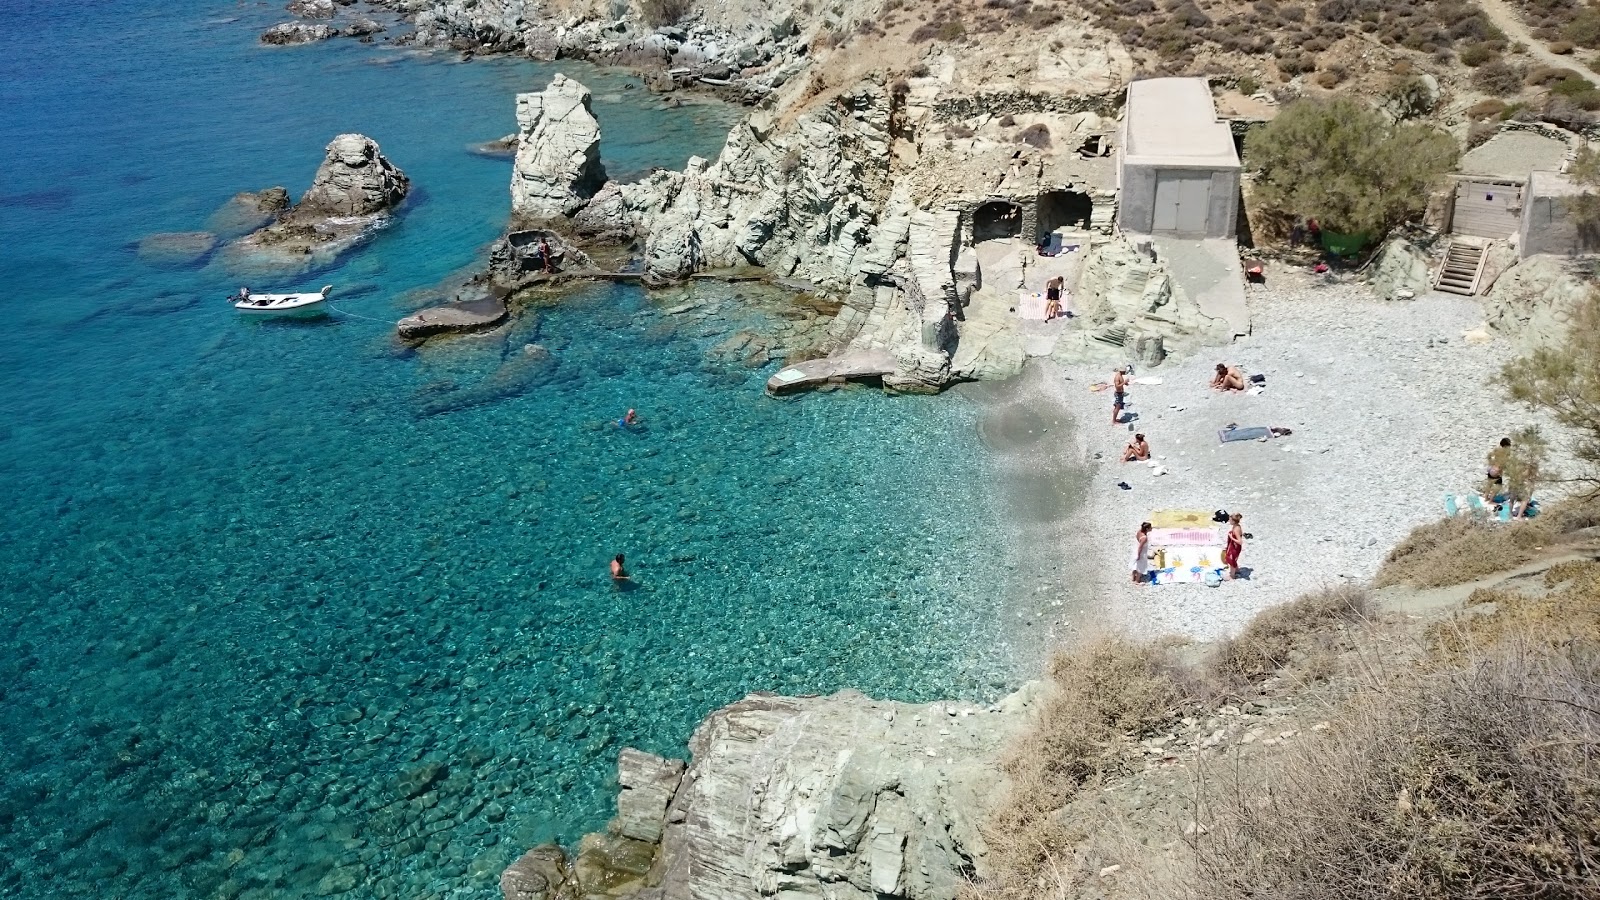 Fotografija Galifos beach z kamni površino